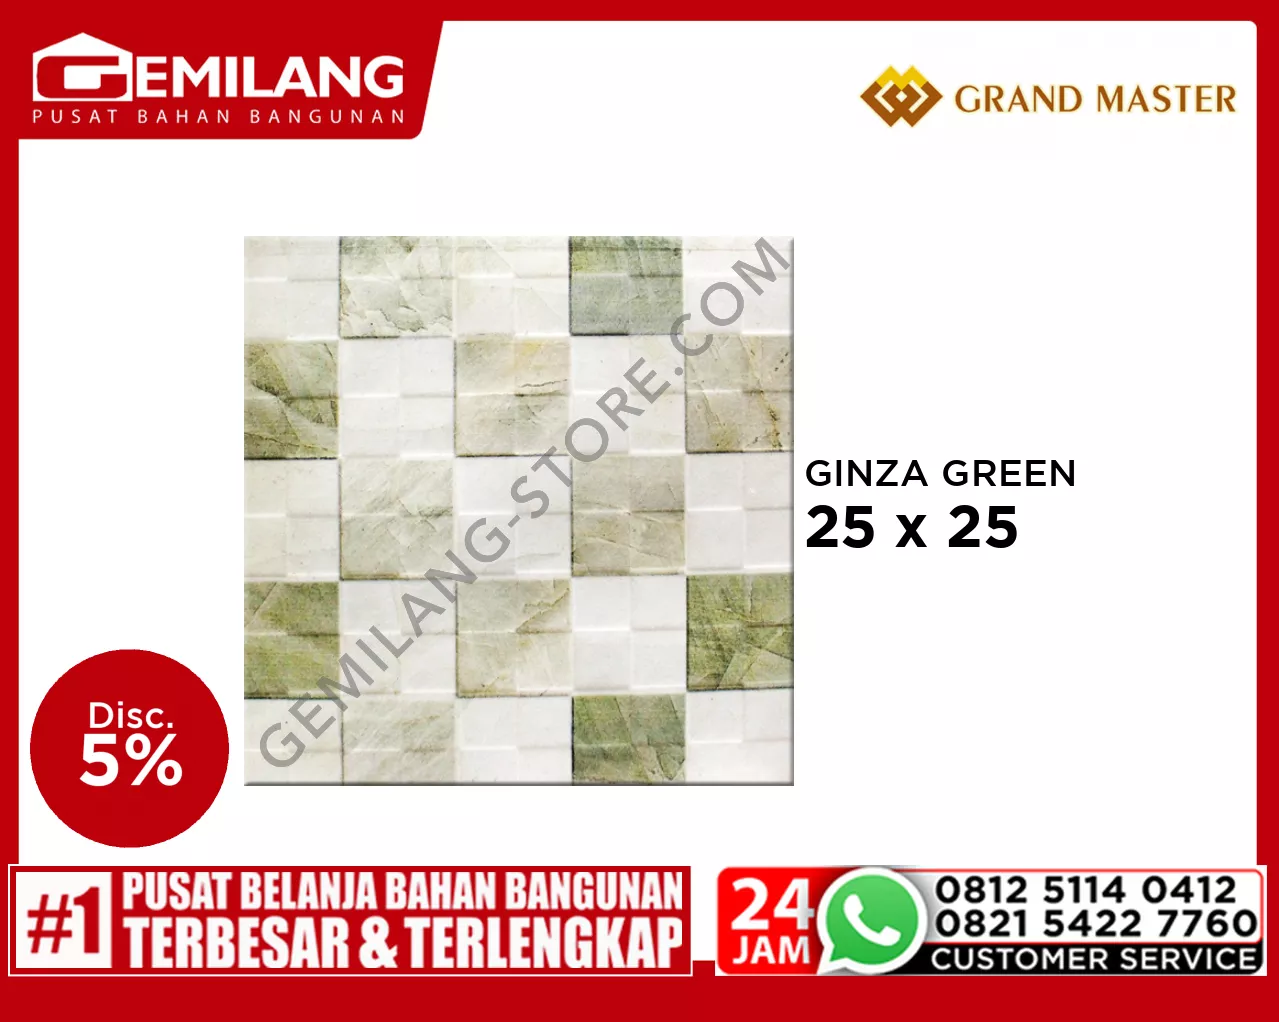 GRAND MASTER GINZA GREEN 25 x 25